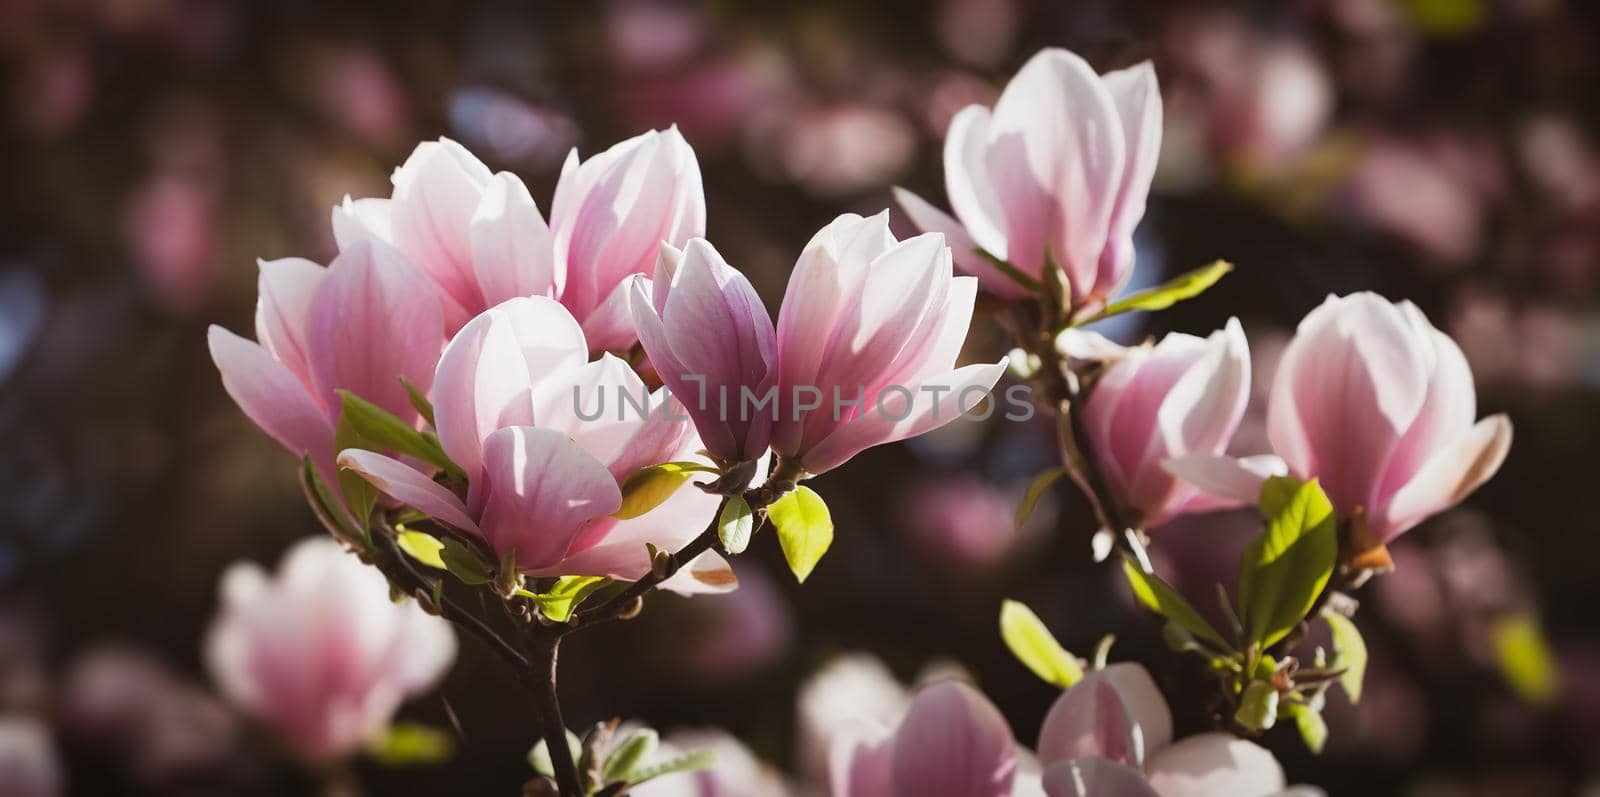 Magnolia flowers background by palinchak